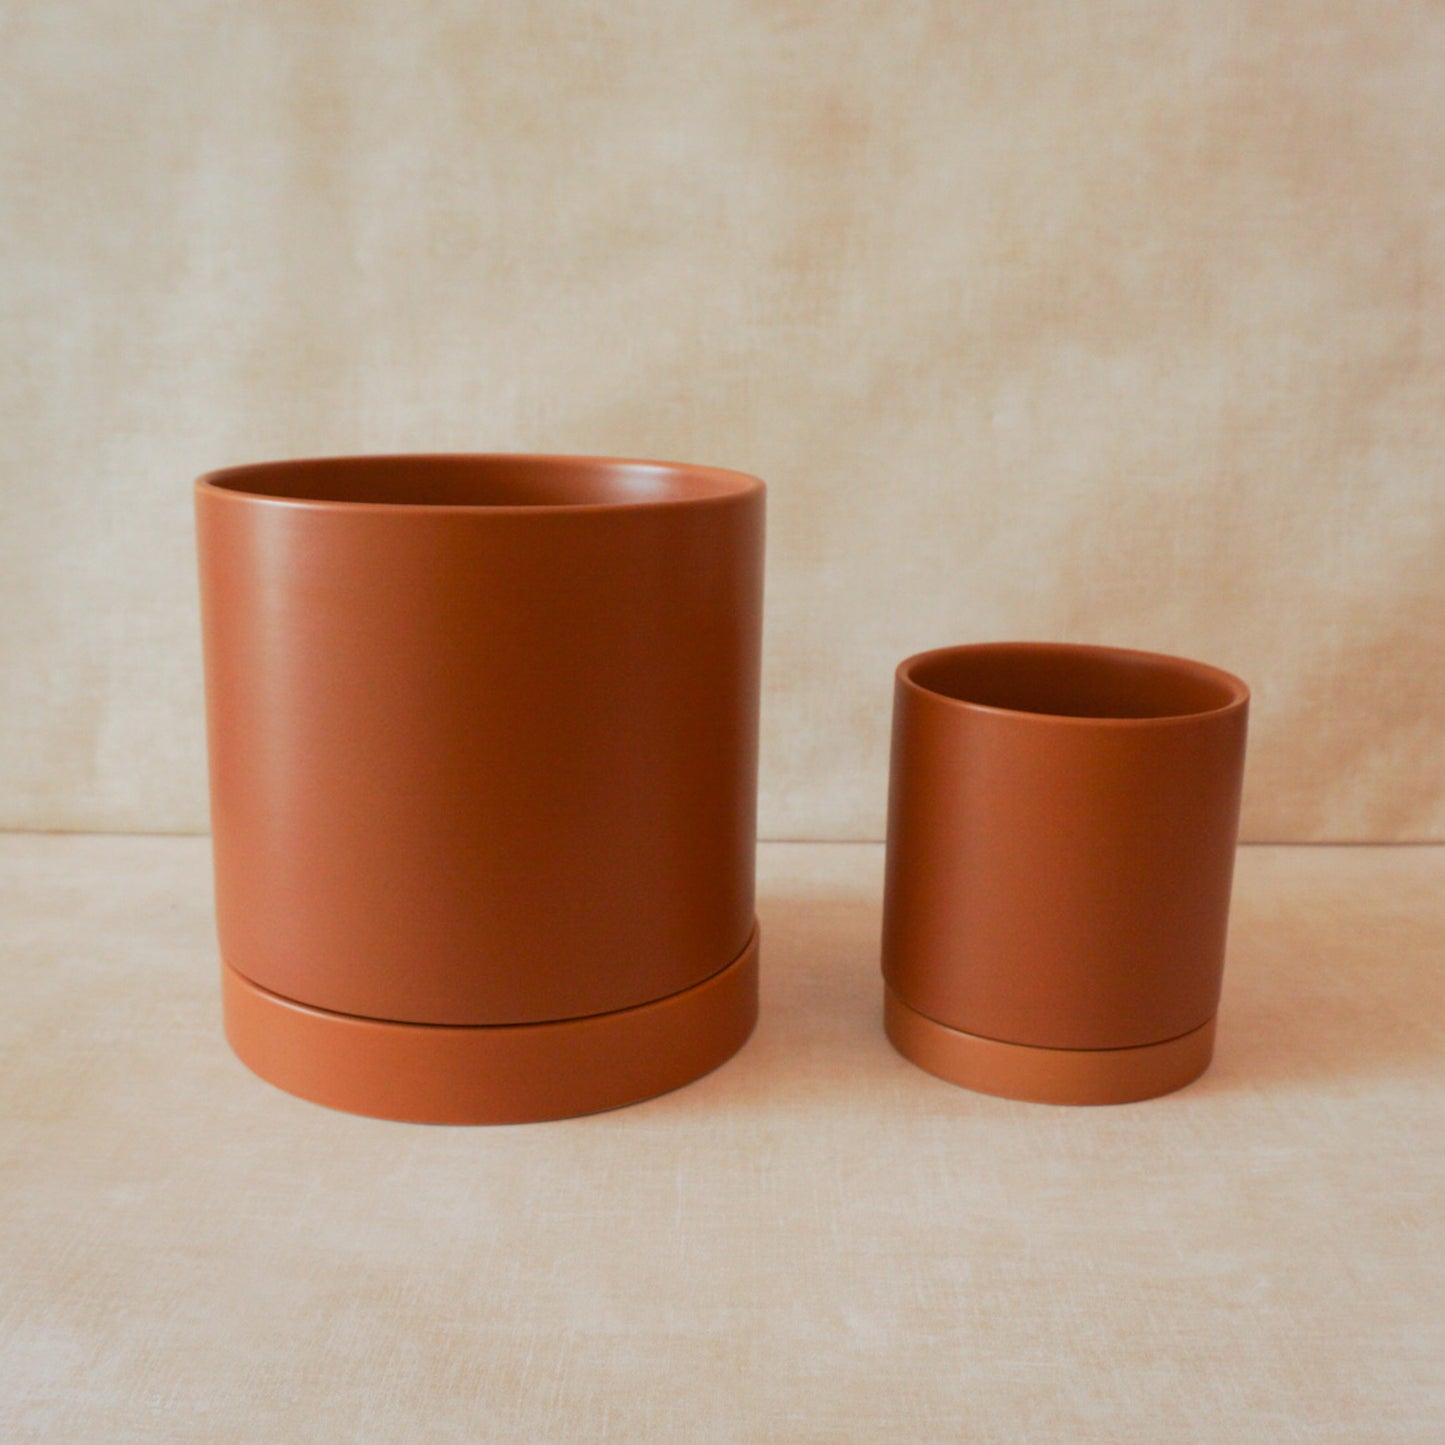 Ceramic burnt orange ceramic planter pot with drainage hole for houseplants